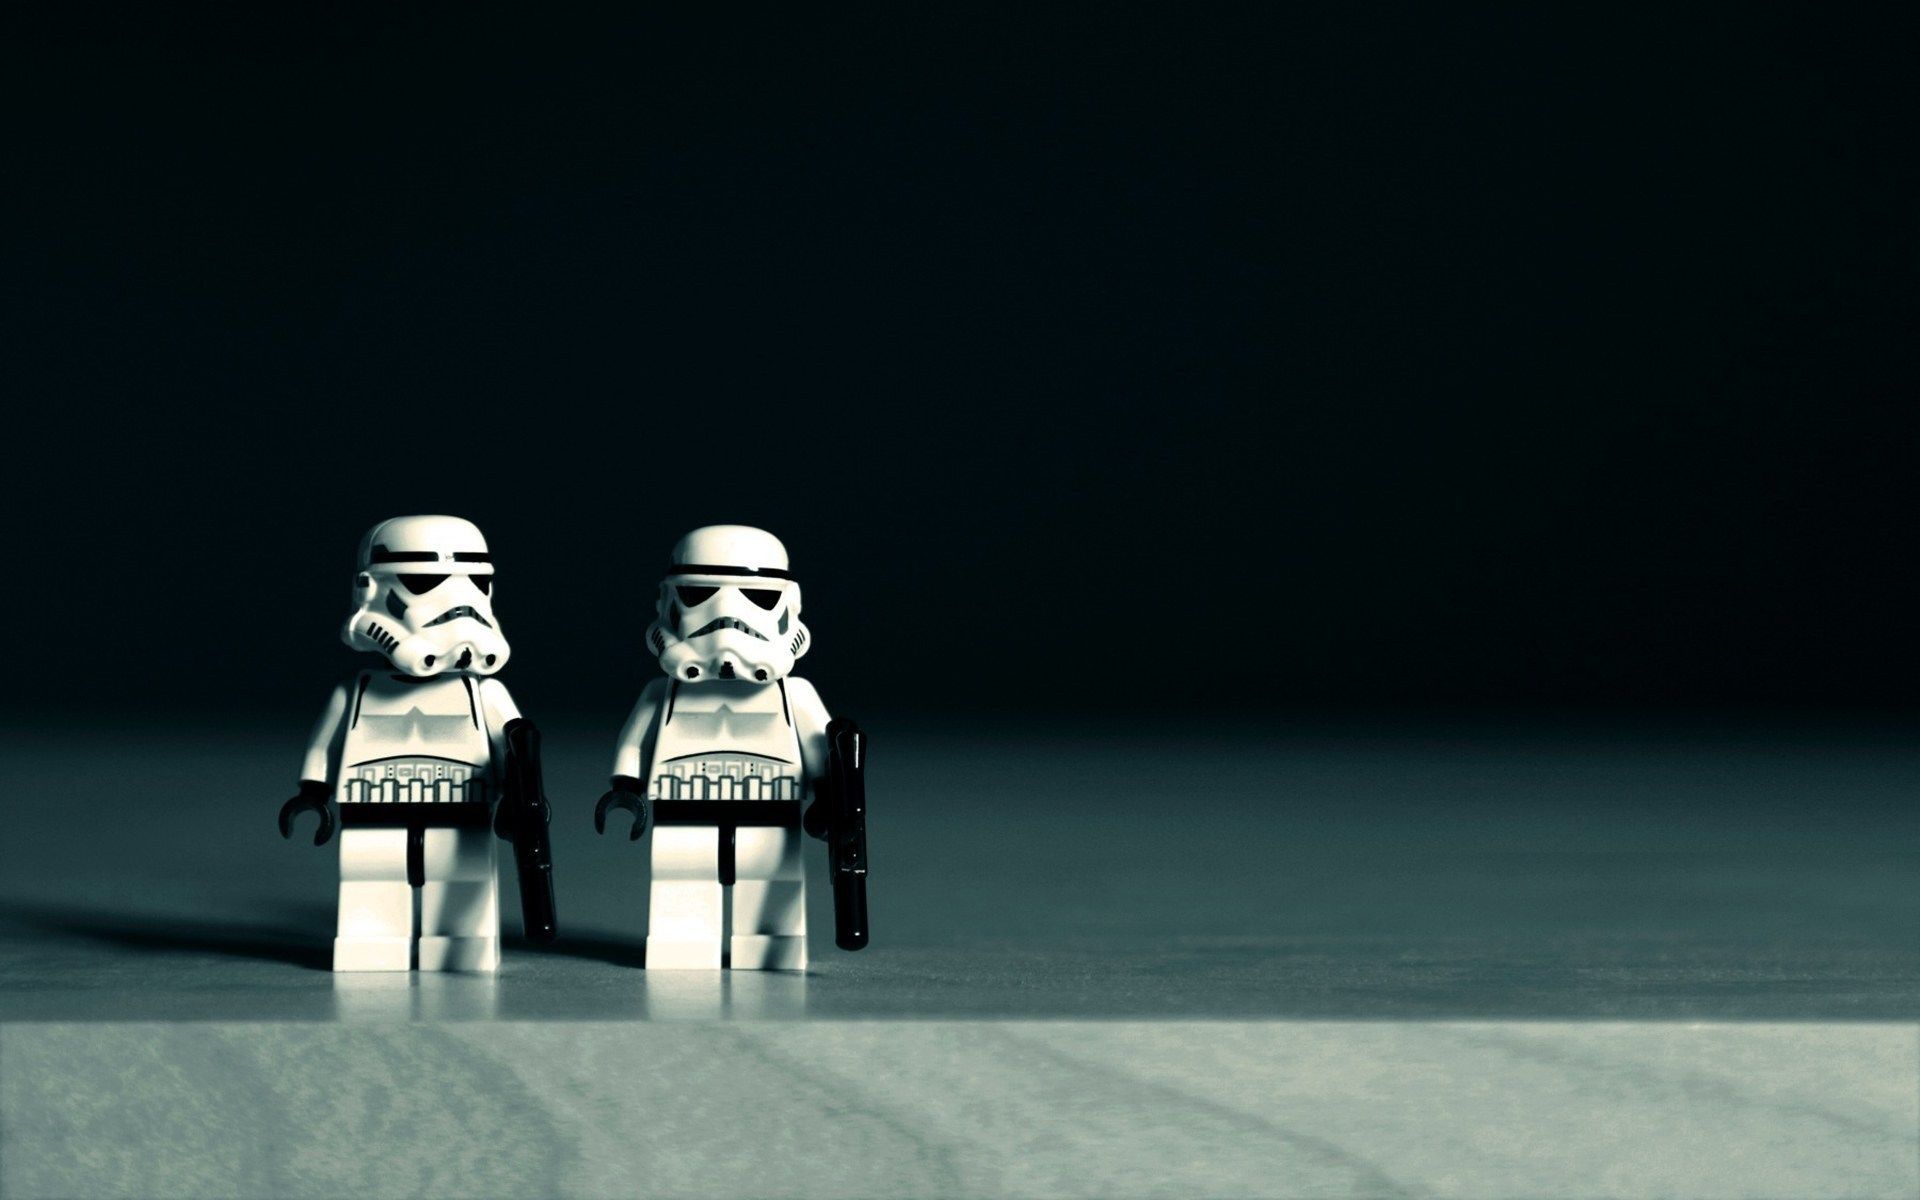 Lego Star Wars Stormtrooper Wallpaper On